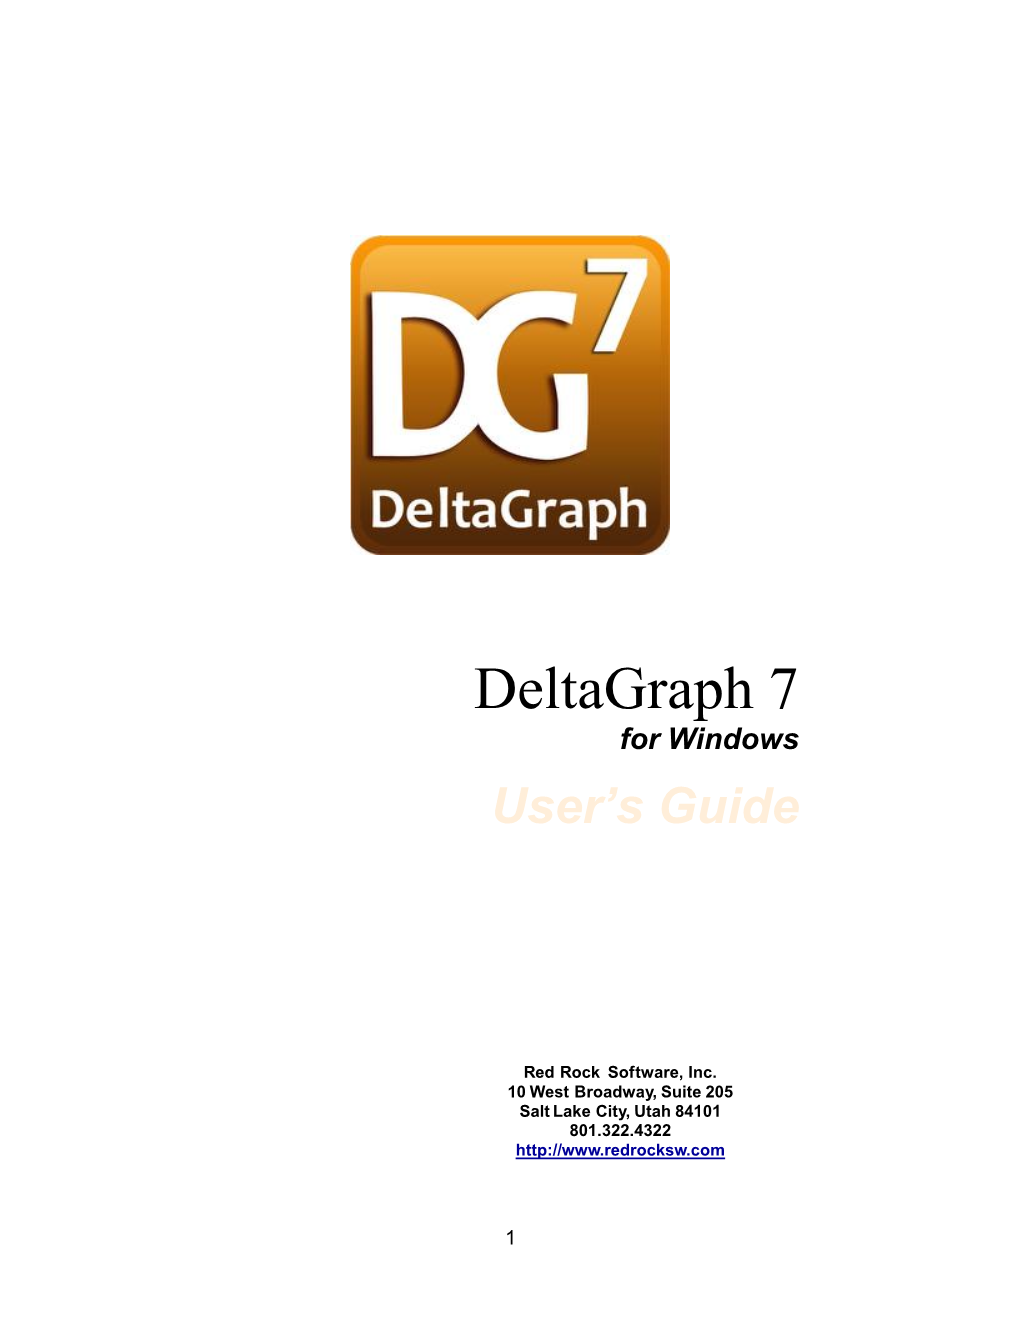 Deltagraph 7 for Windows